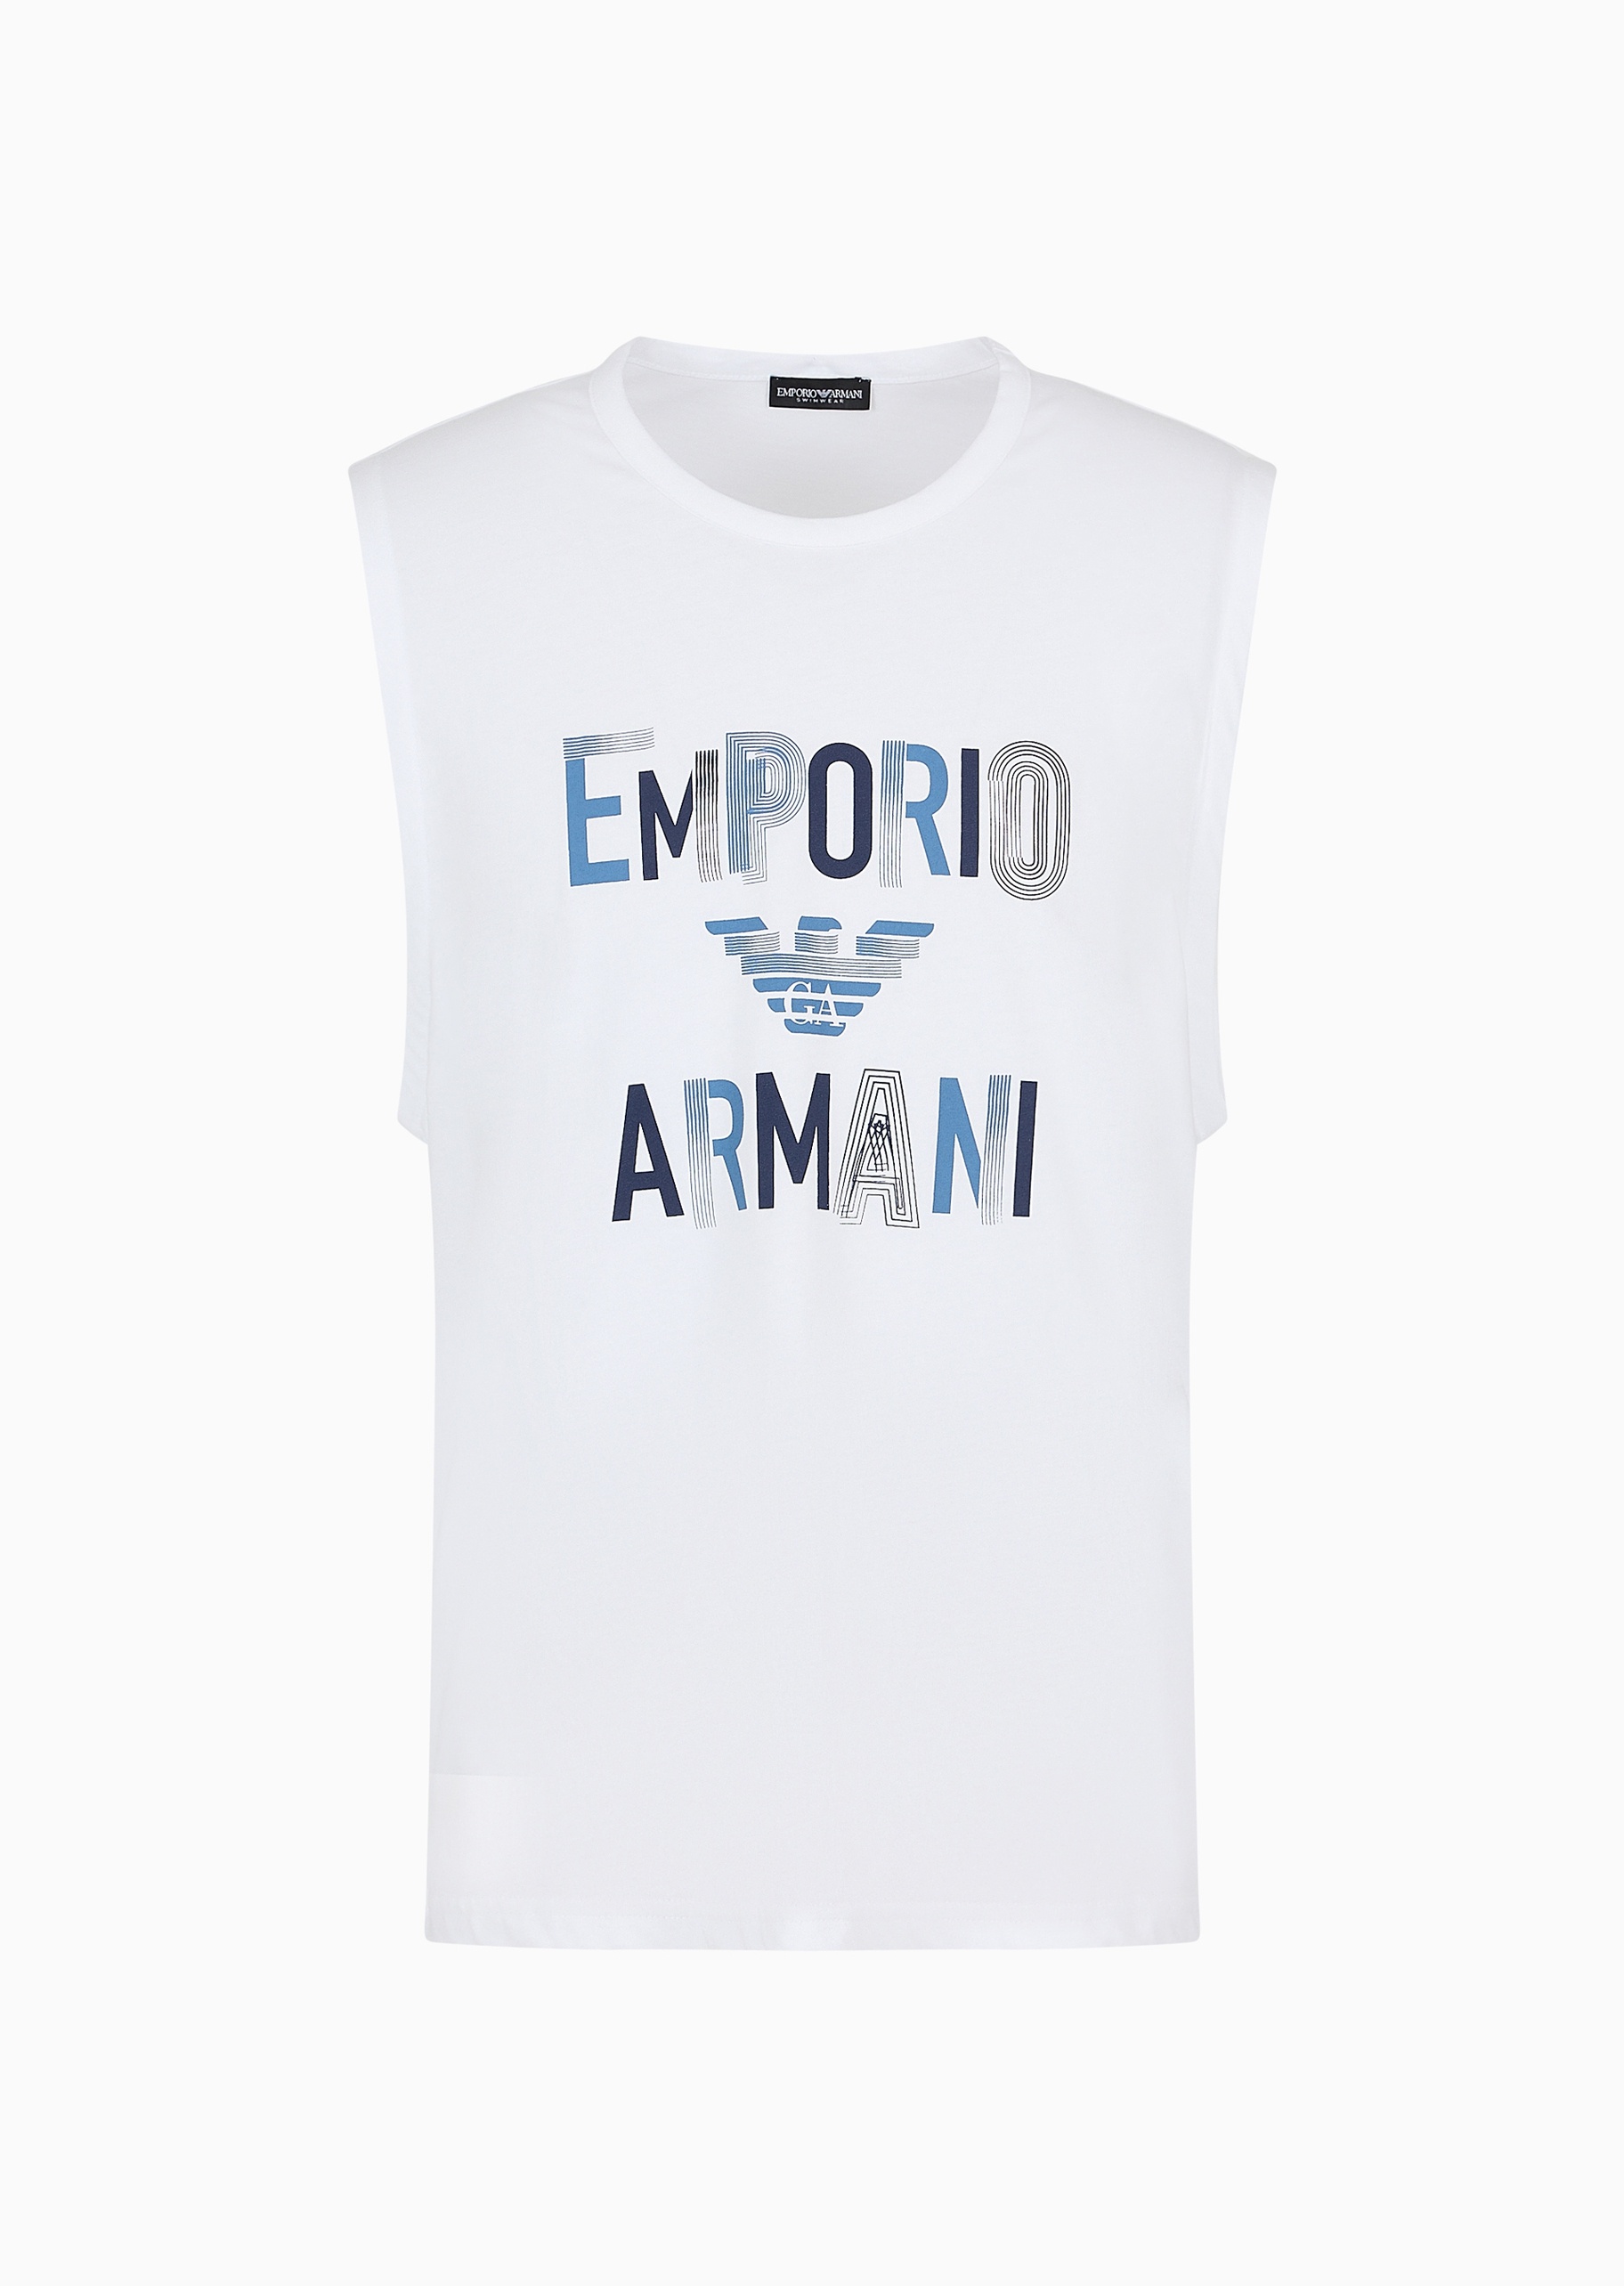 Emporio Armani 男士全棉合身无袖圆领印花沙滩T恤